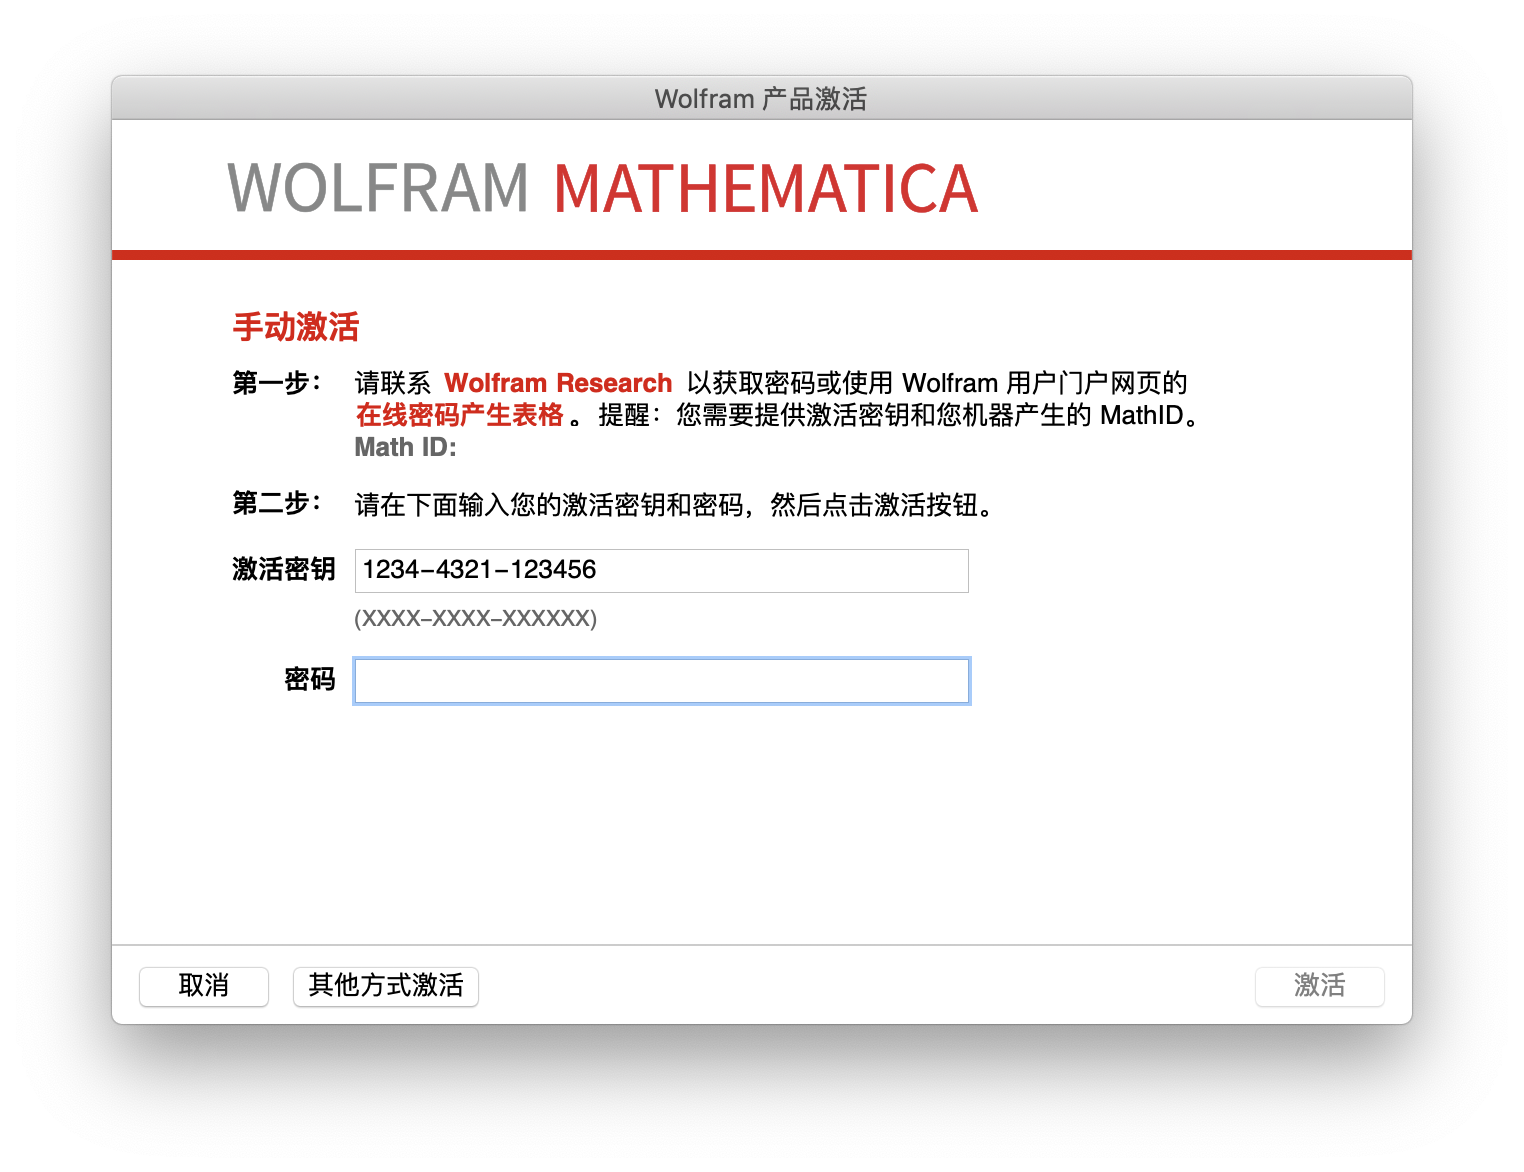 Wolfram Mathematica 13.1.0 Crack + Activation Key Free 2023 